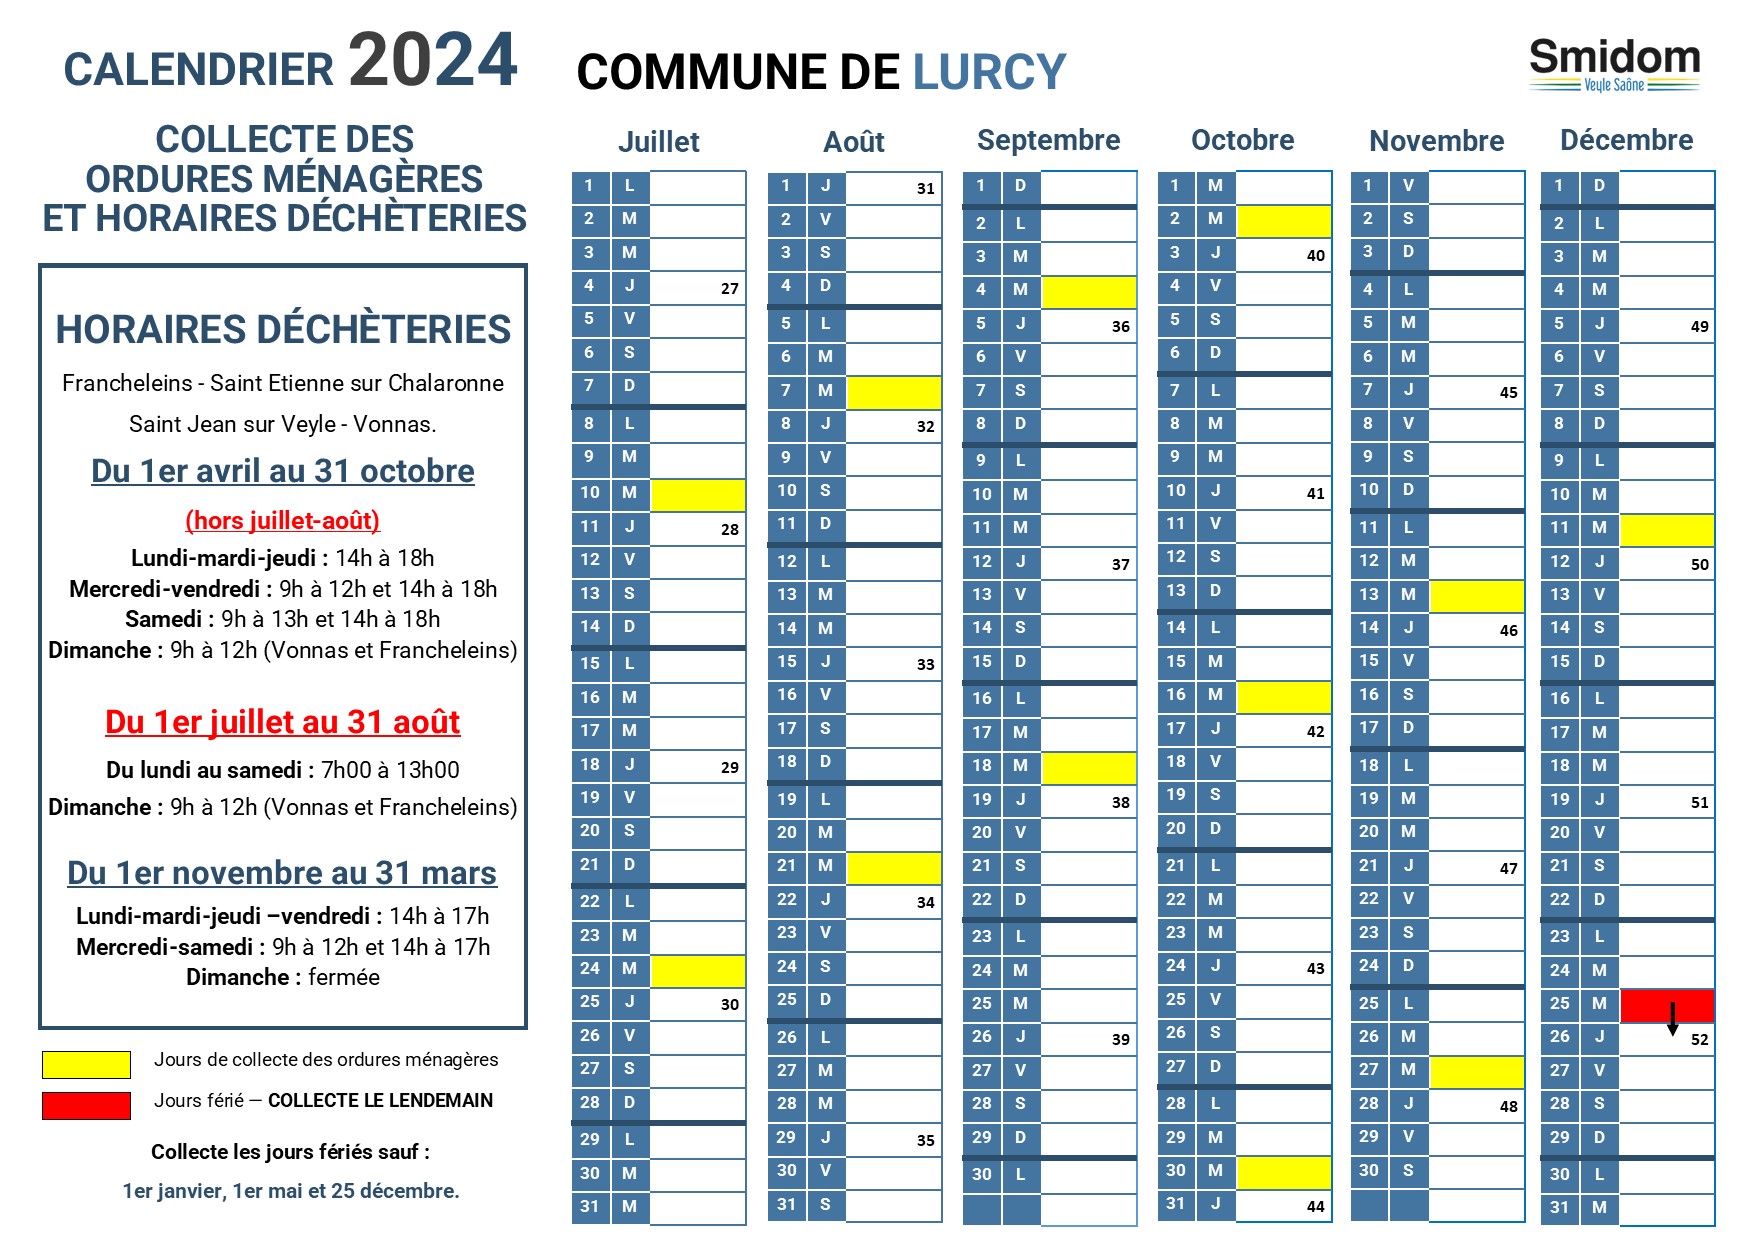 LURCY - Calendrier 2024 - 2.jpg